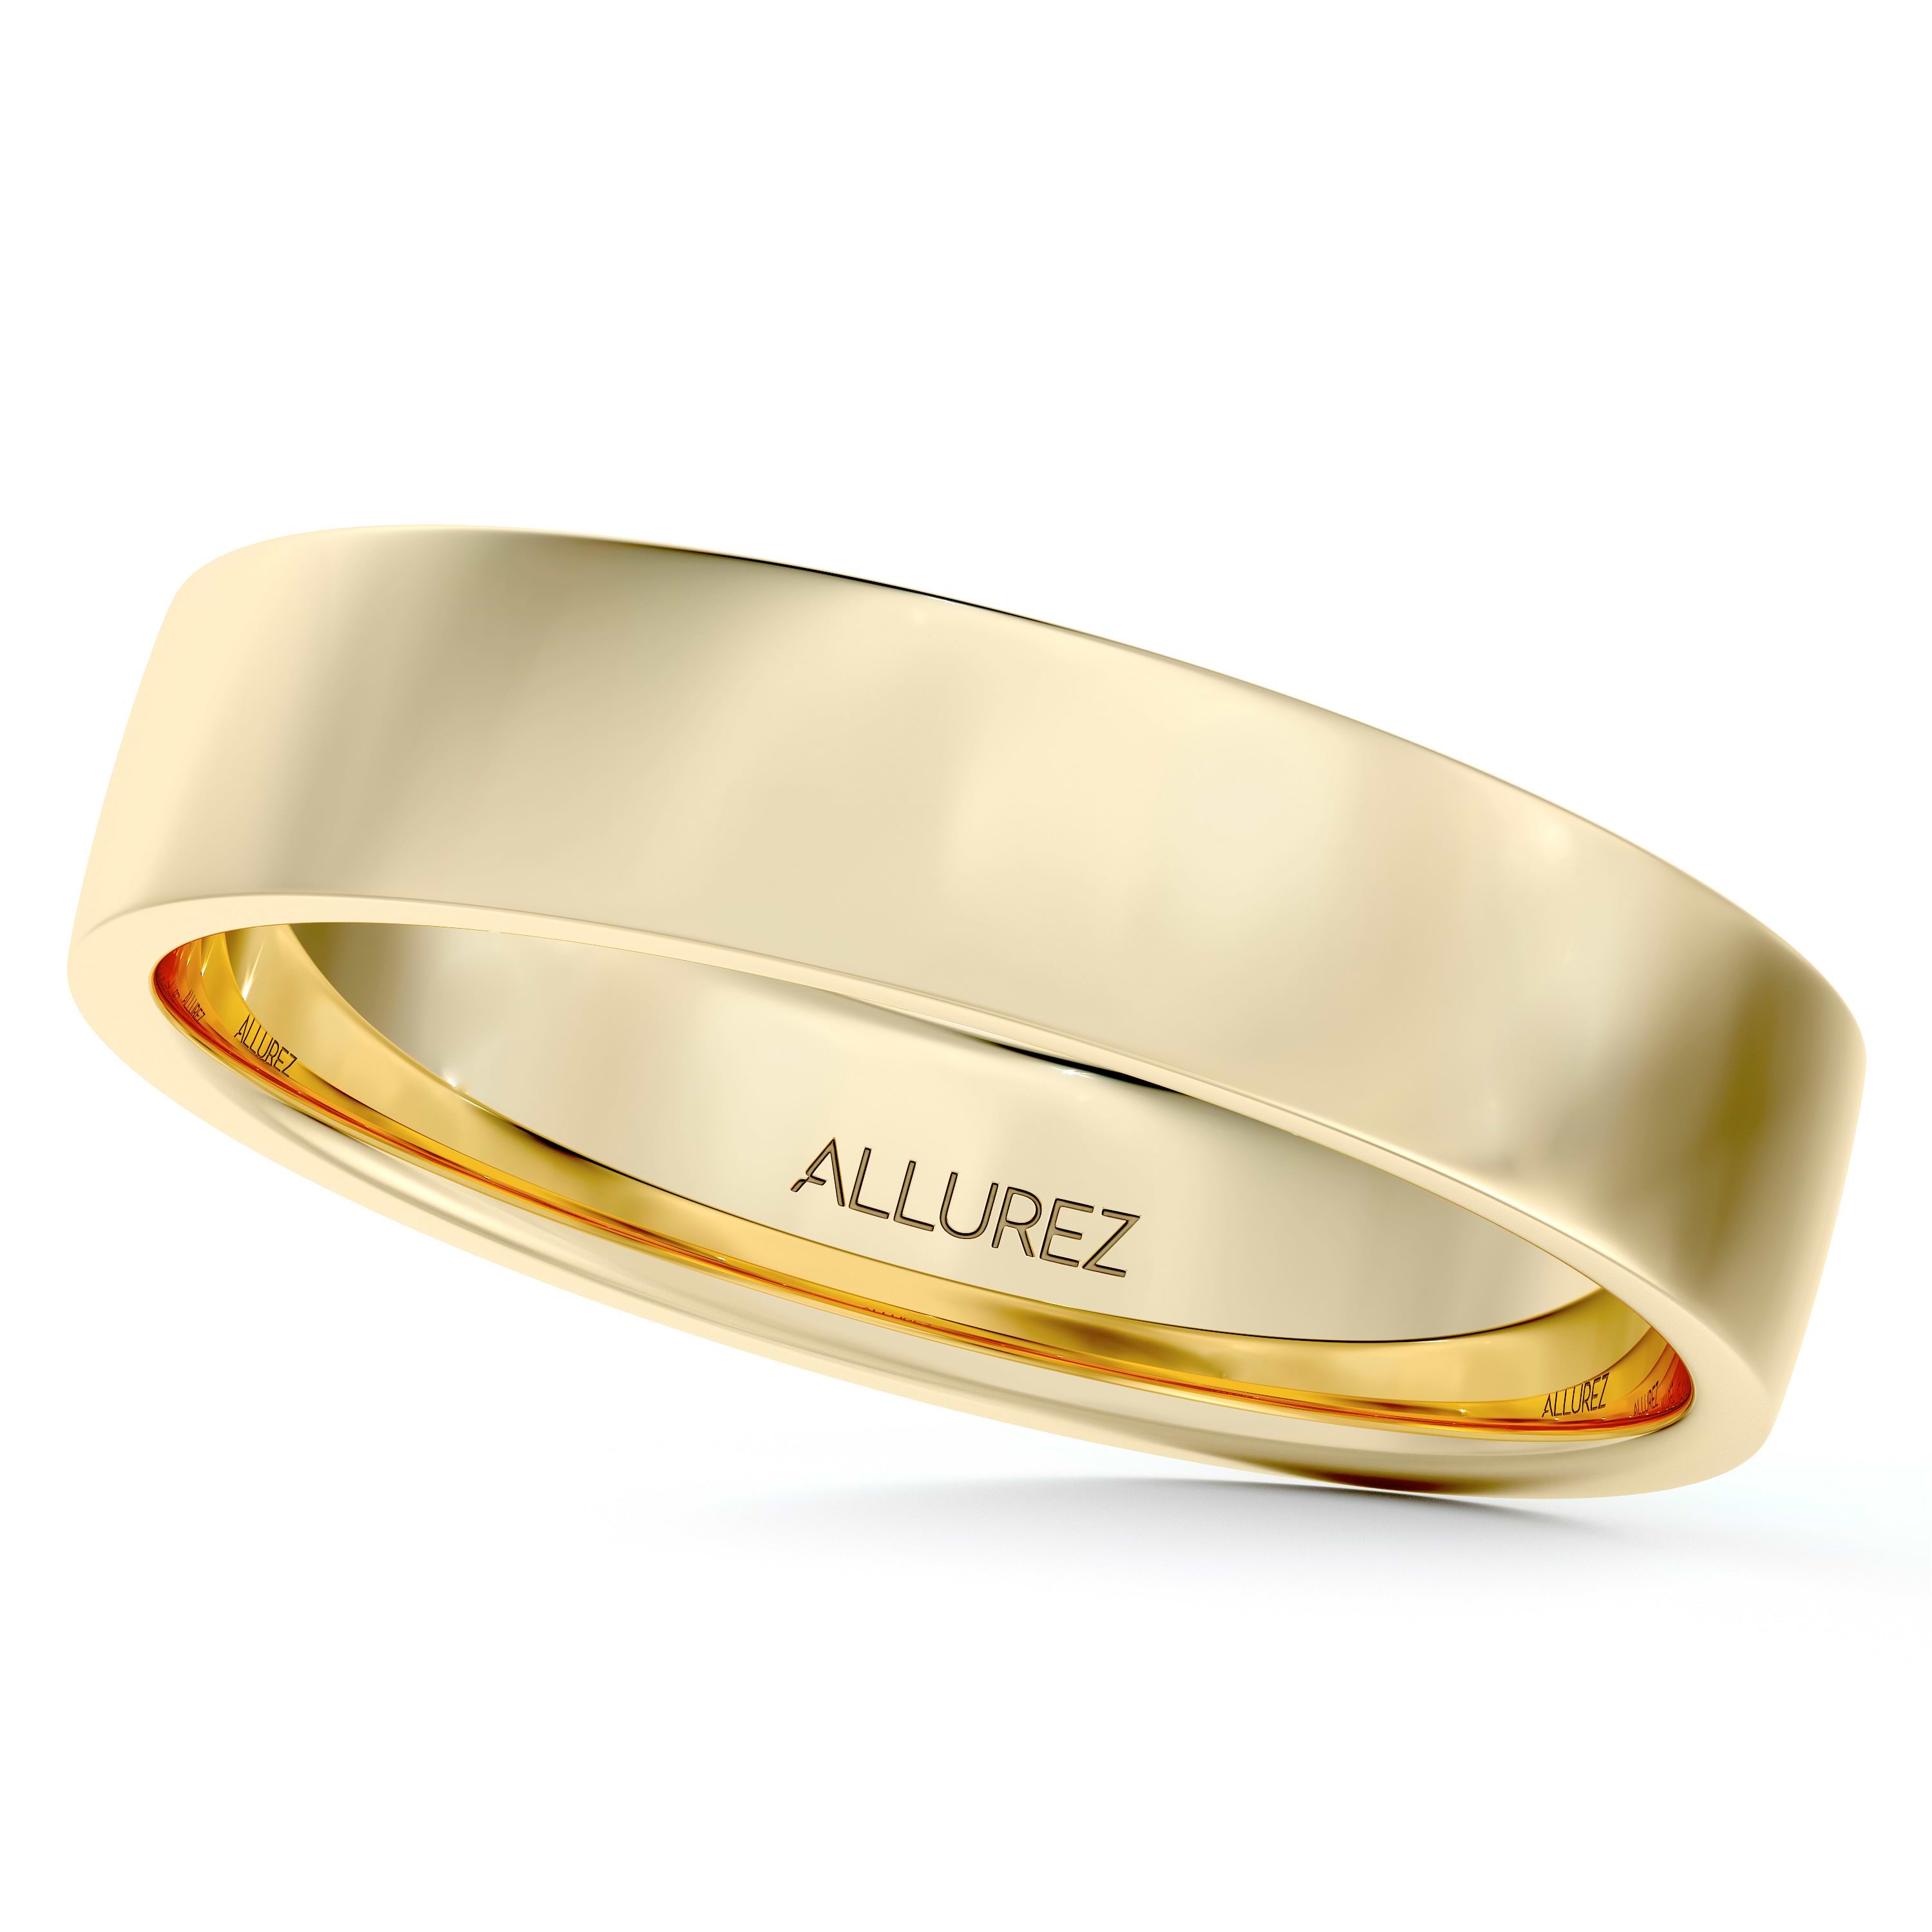 14k Yellow Gold Plain Wedding Band Flat Comfort-Fit Plain Ring (4 mm)